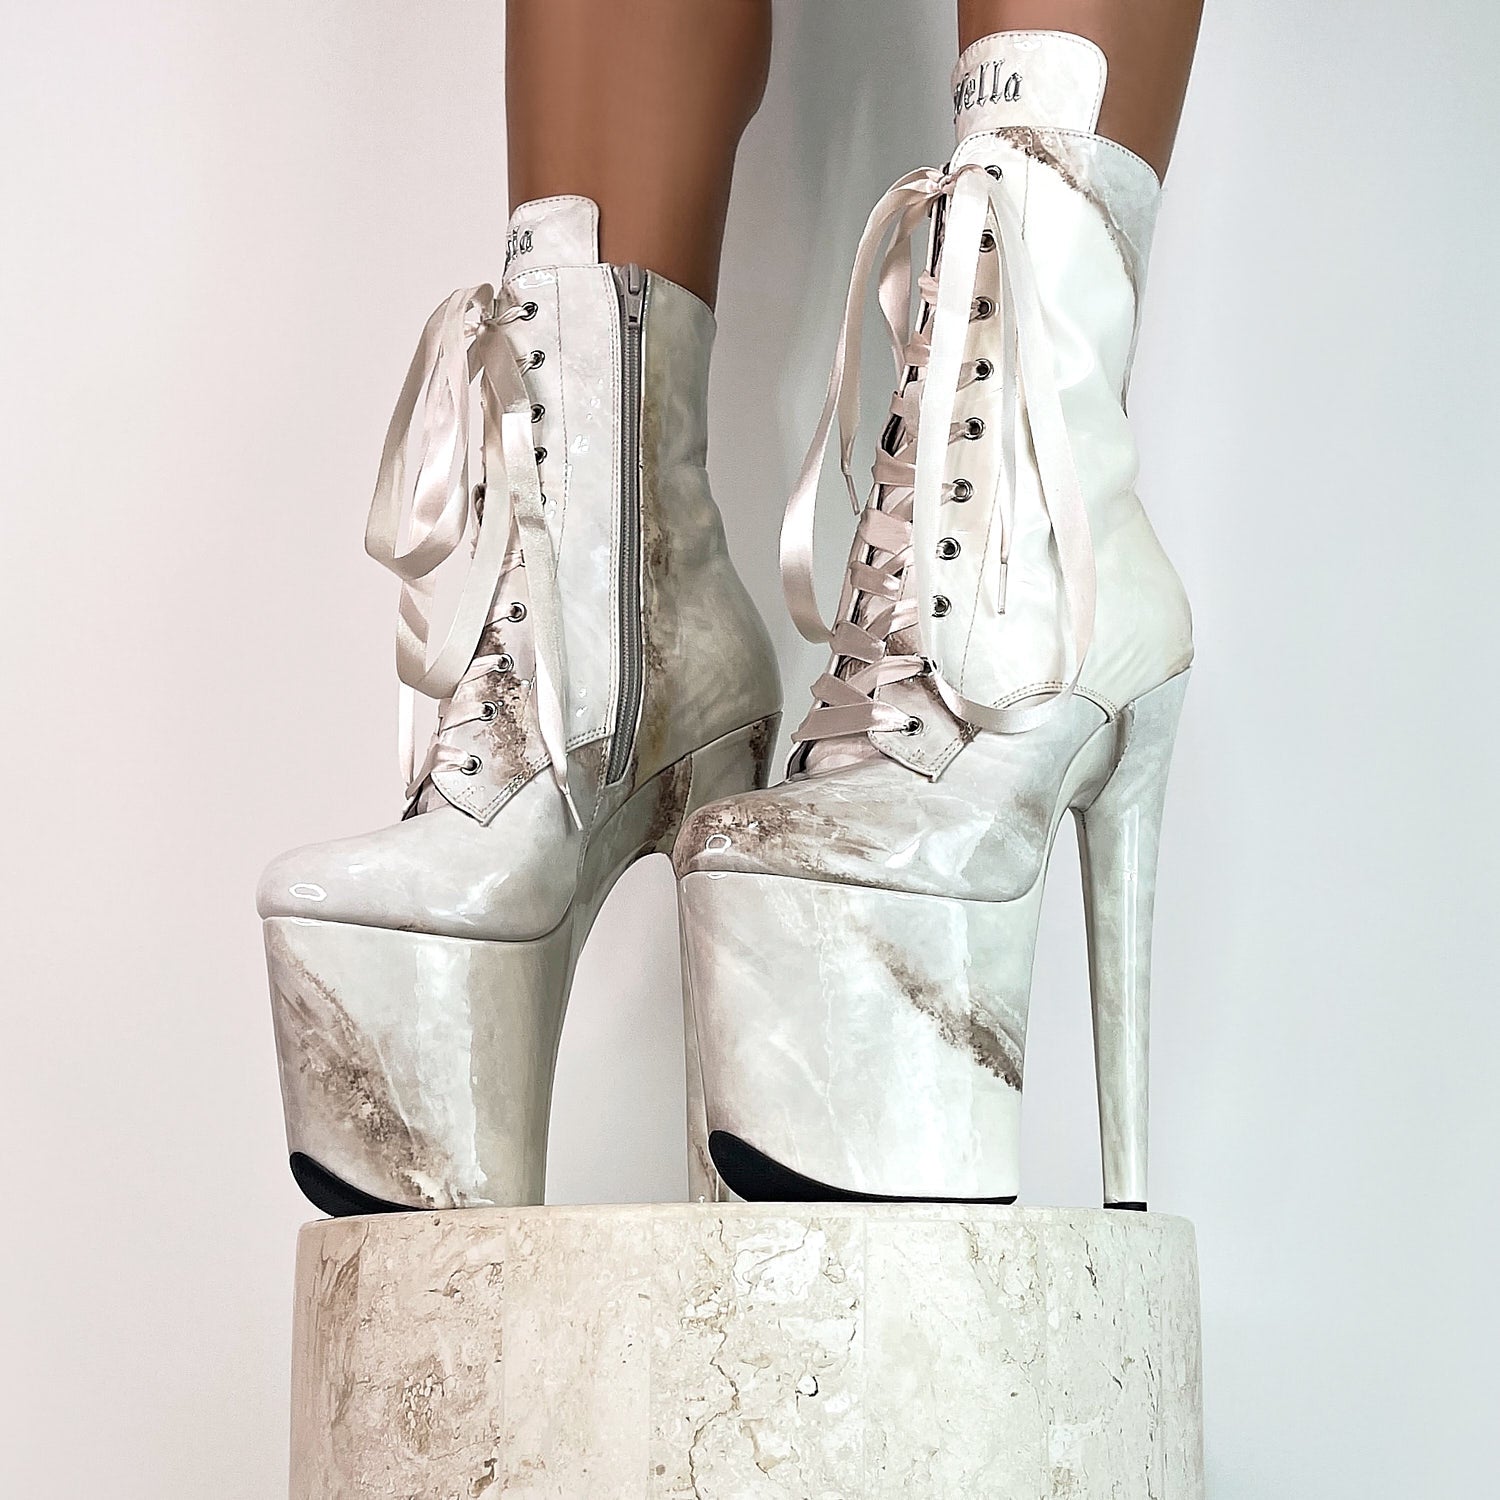 Hope Boot - 8 INCH, stripper shoe, stripper heel, pole heel, not a pleaser, platform, dancer, pole dance, floor work